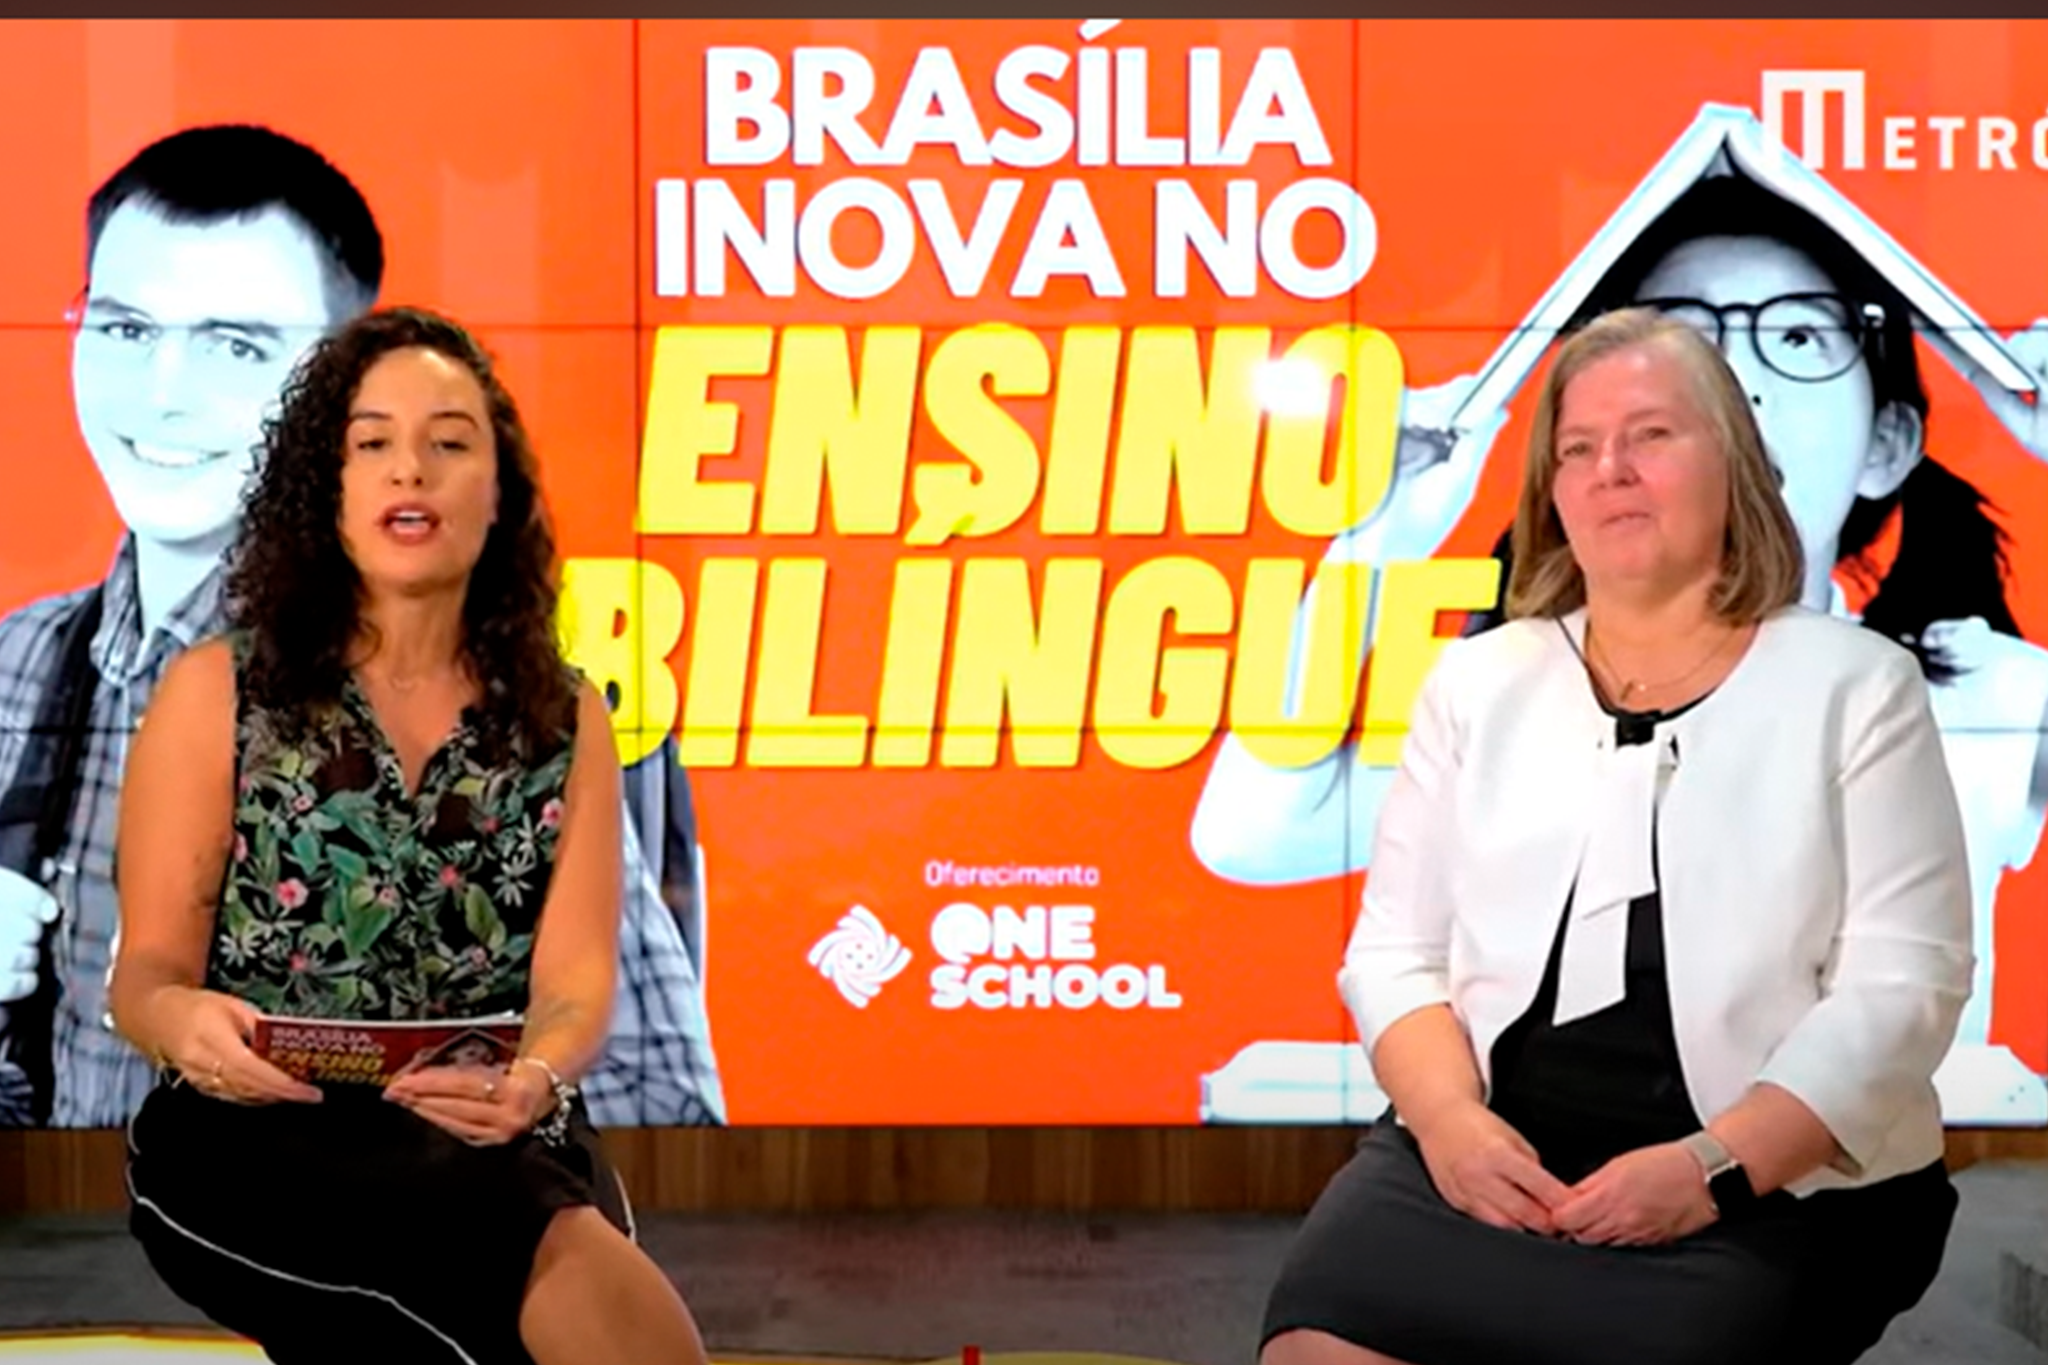 Brasília inova no Ensino Bilíngue